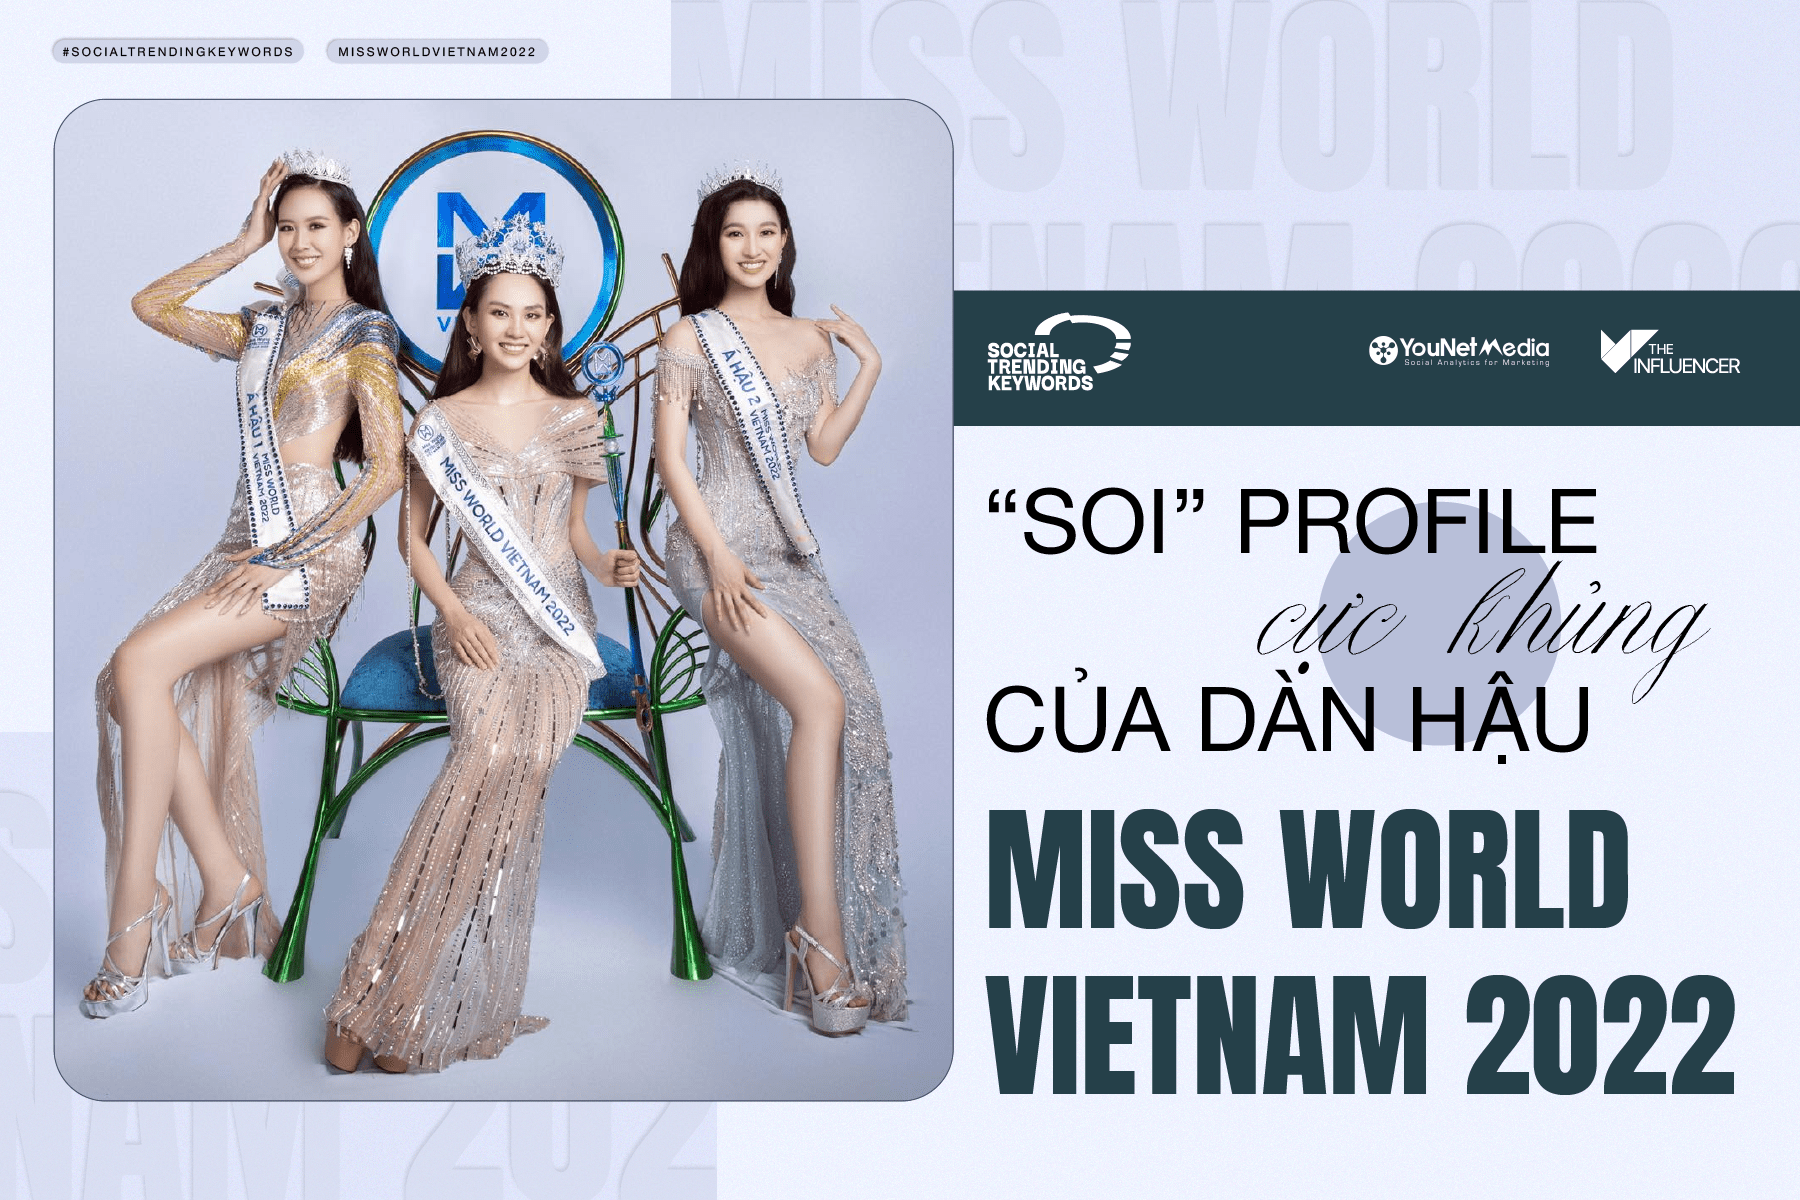 #SocialTrendingKeywords: “Soi” profile cực khủng của dàn hậu Miss World Vietnam 2022